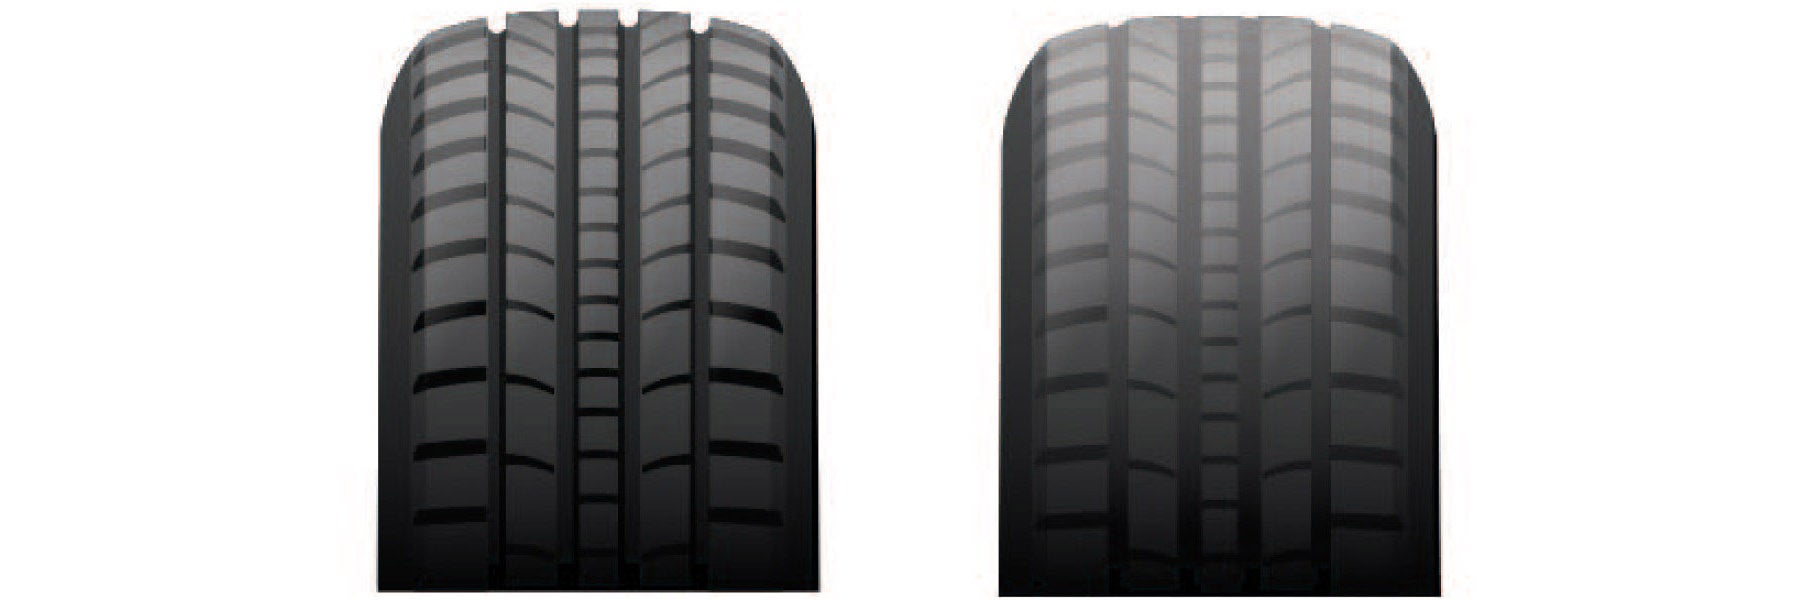 Tire tread depth comparison at Earnhardt Peoria Kia in Peoria AZ